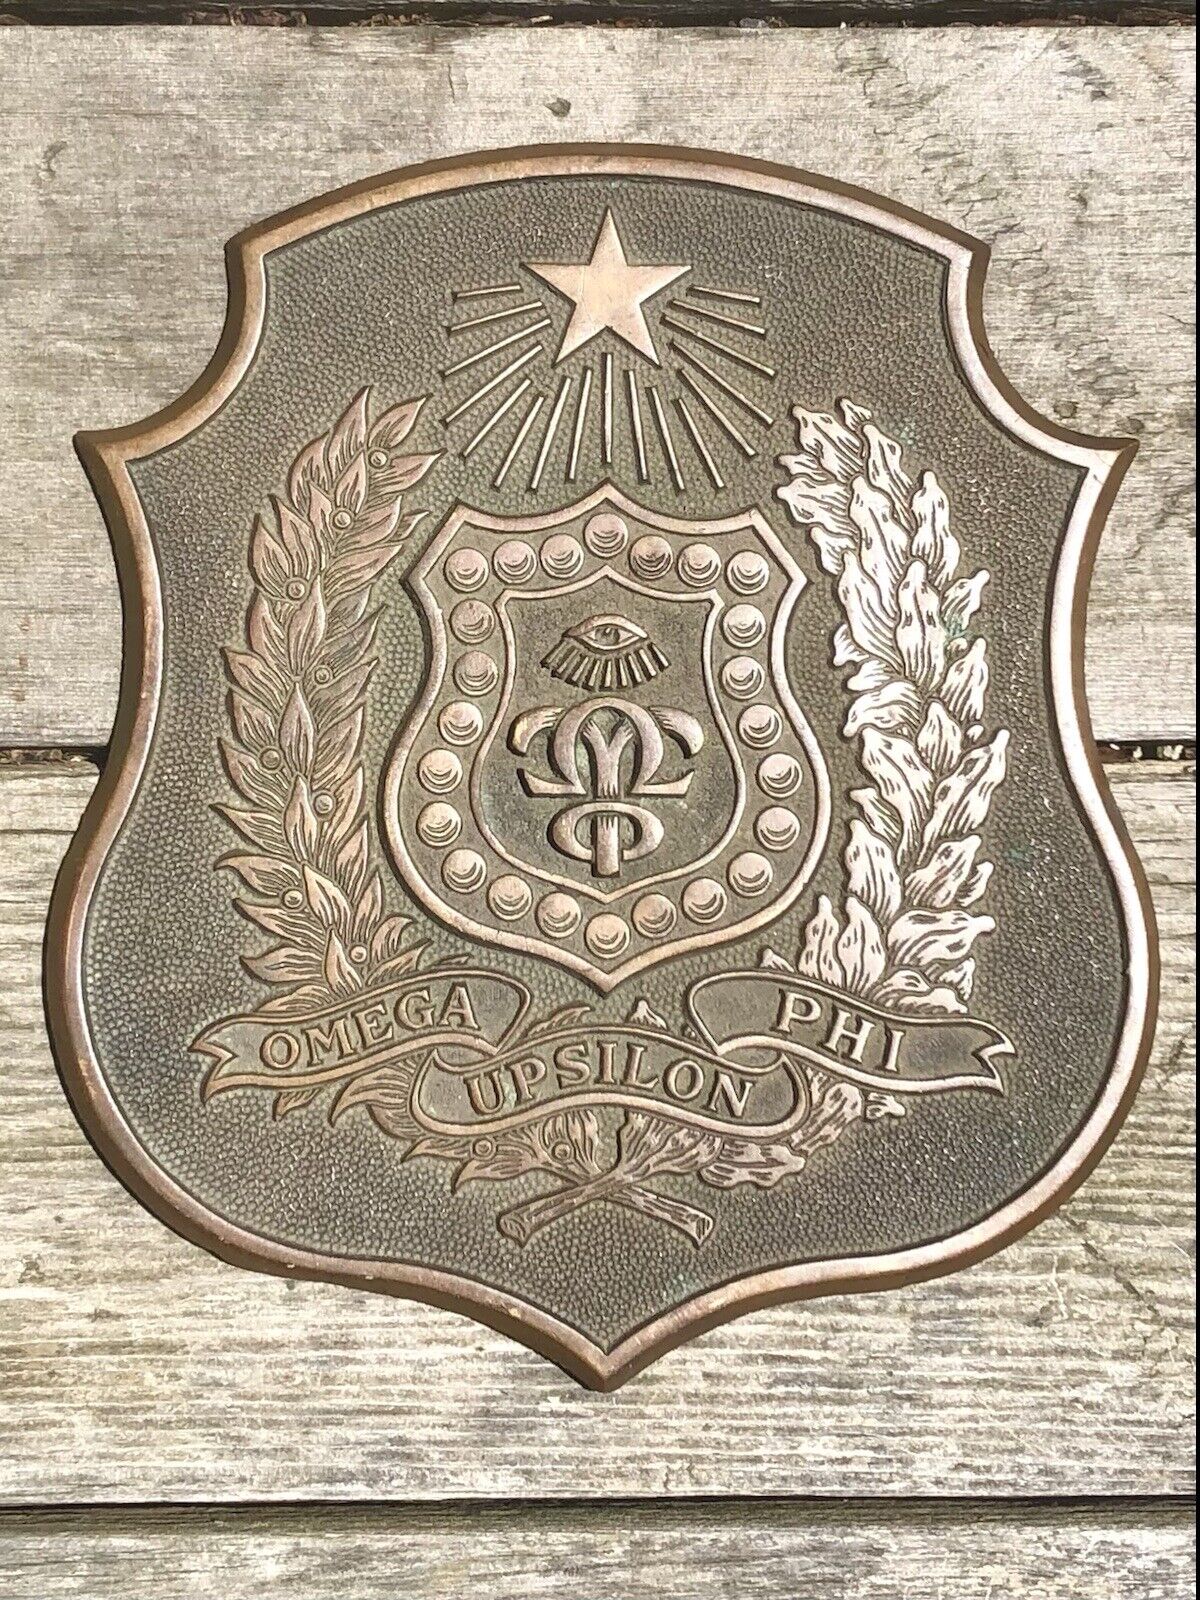 Nice Vintage Omega Upsilon Phi Bronze Plaque—Early Medical Fraternity